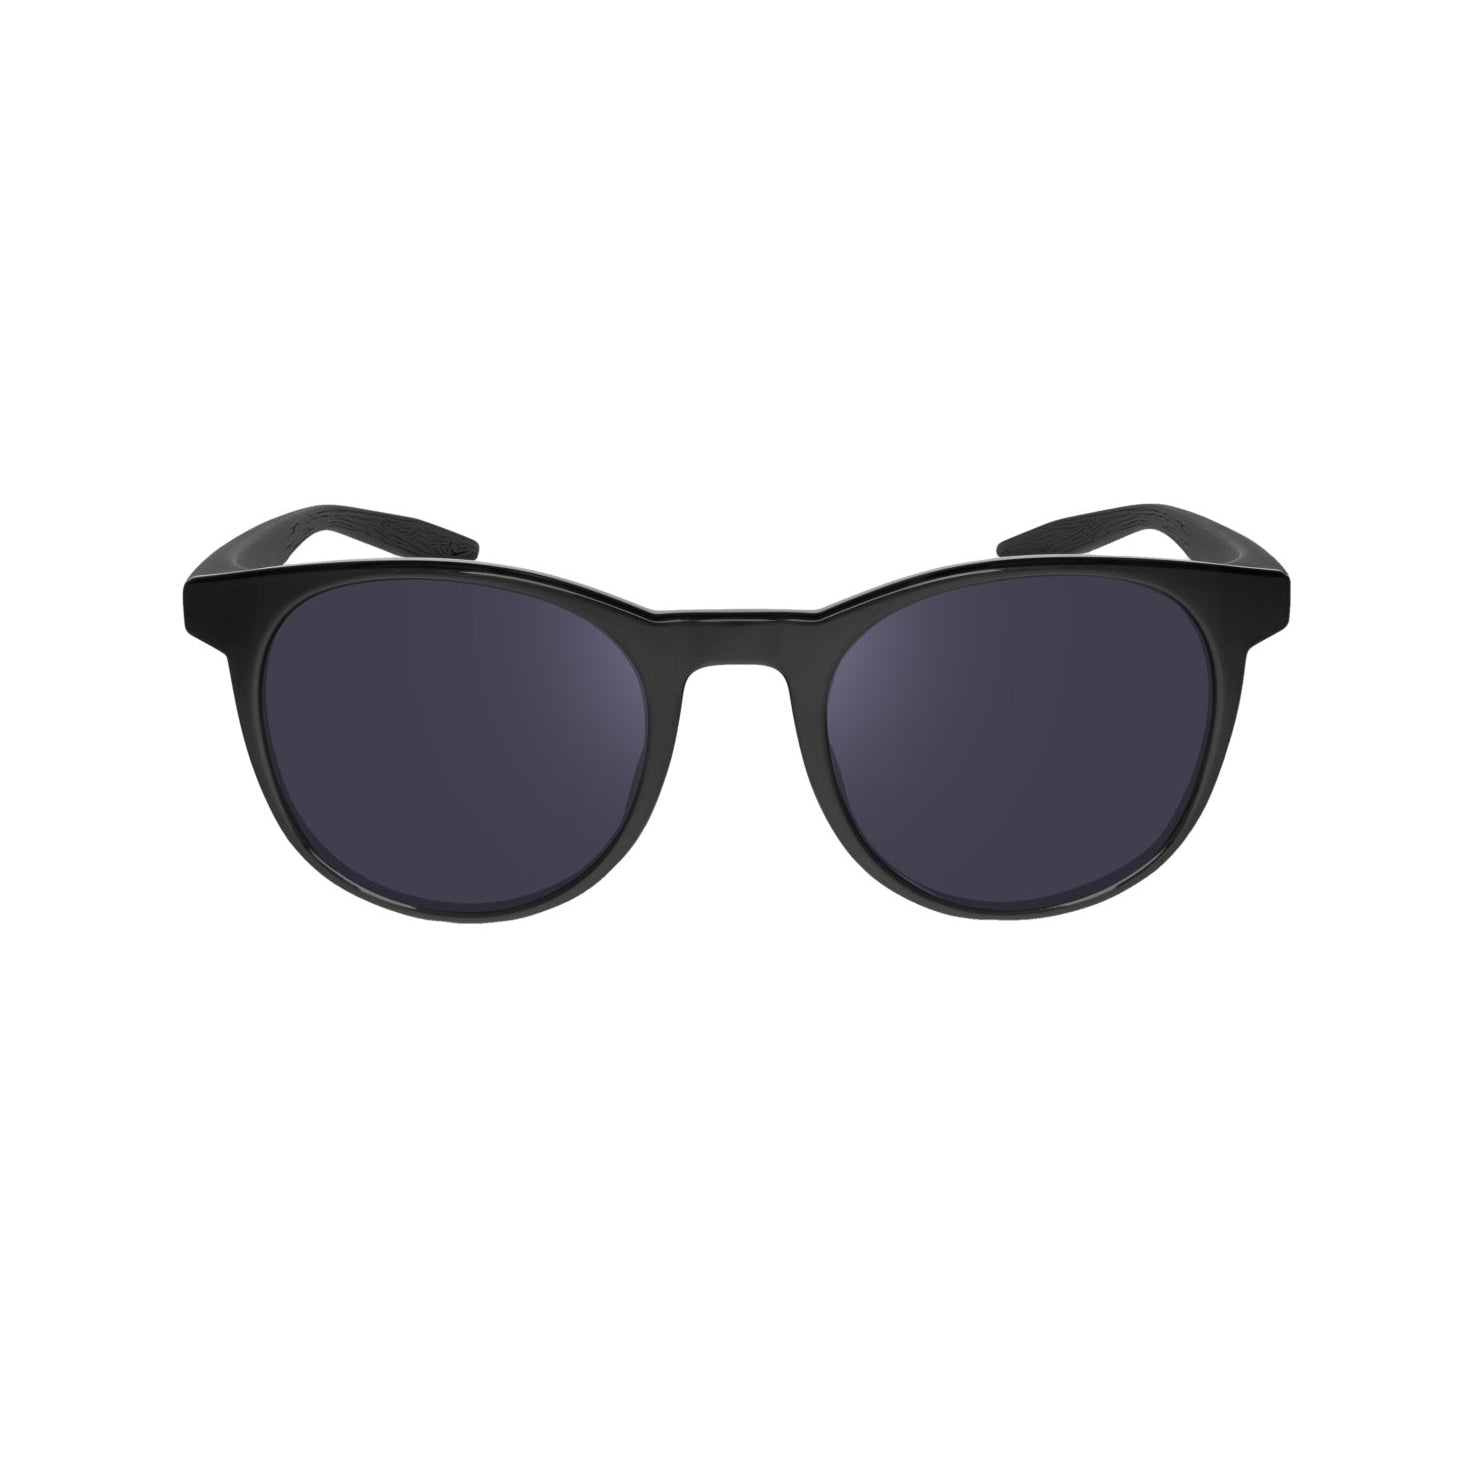 Nike Sunglasses Horizon Ascent Black/Dark Grey Lens